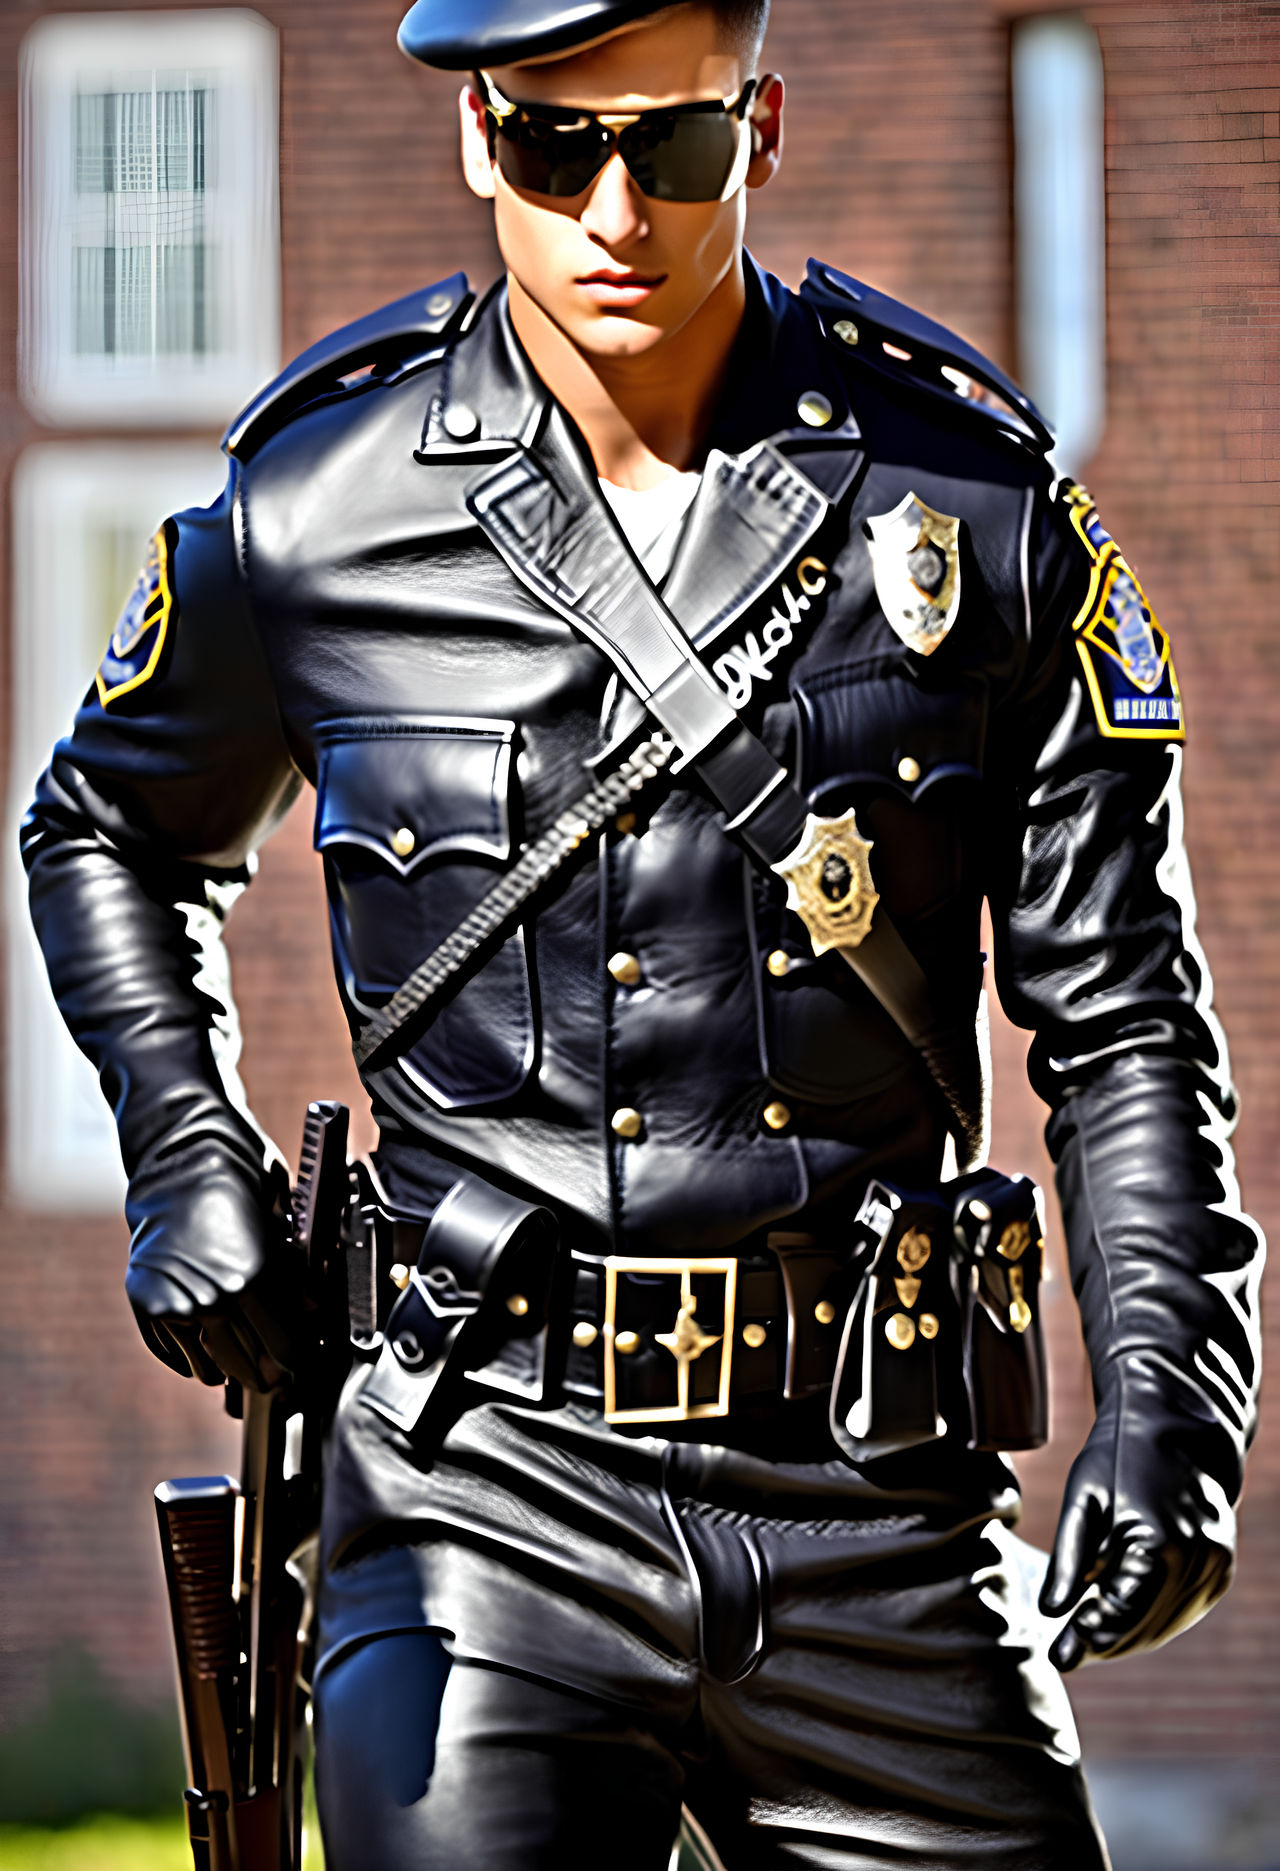 Leather-police by RupertRat on DeviantArt